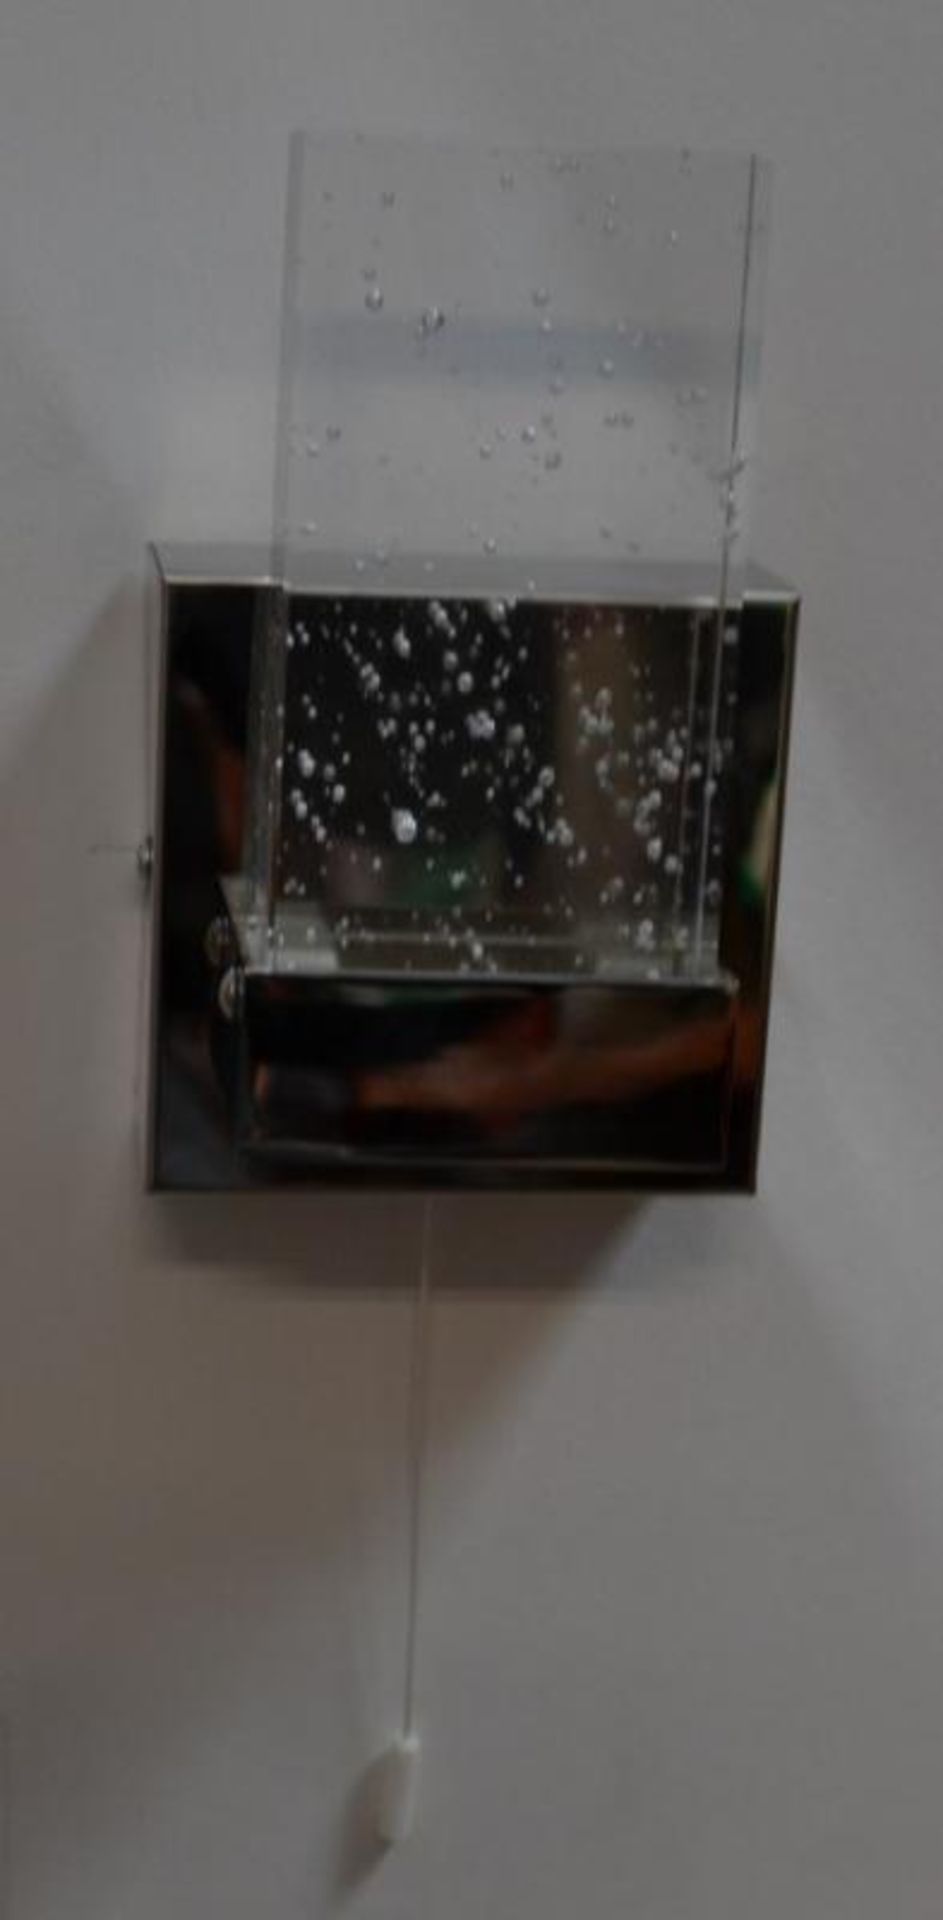 1 x Led Bathroom Wall Bracket Chrome Clear Bubble Glass - CL364 - Ref: ERP1- 14509 - Loc